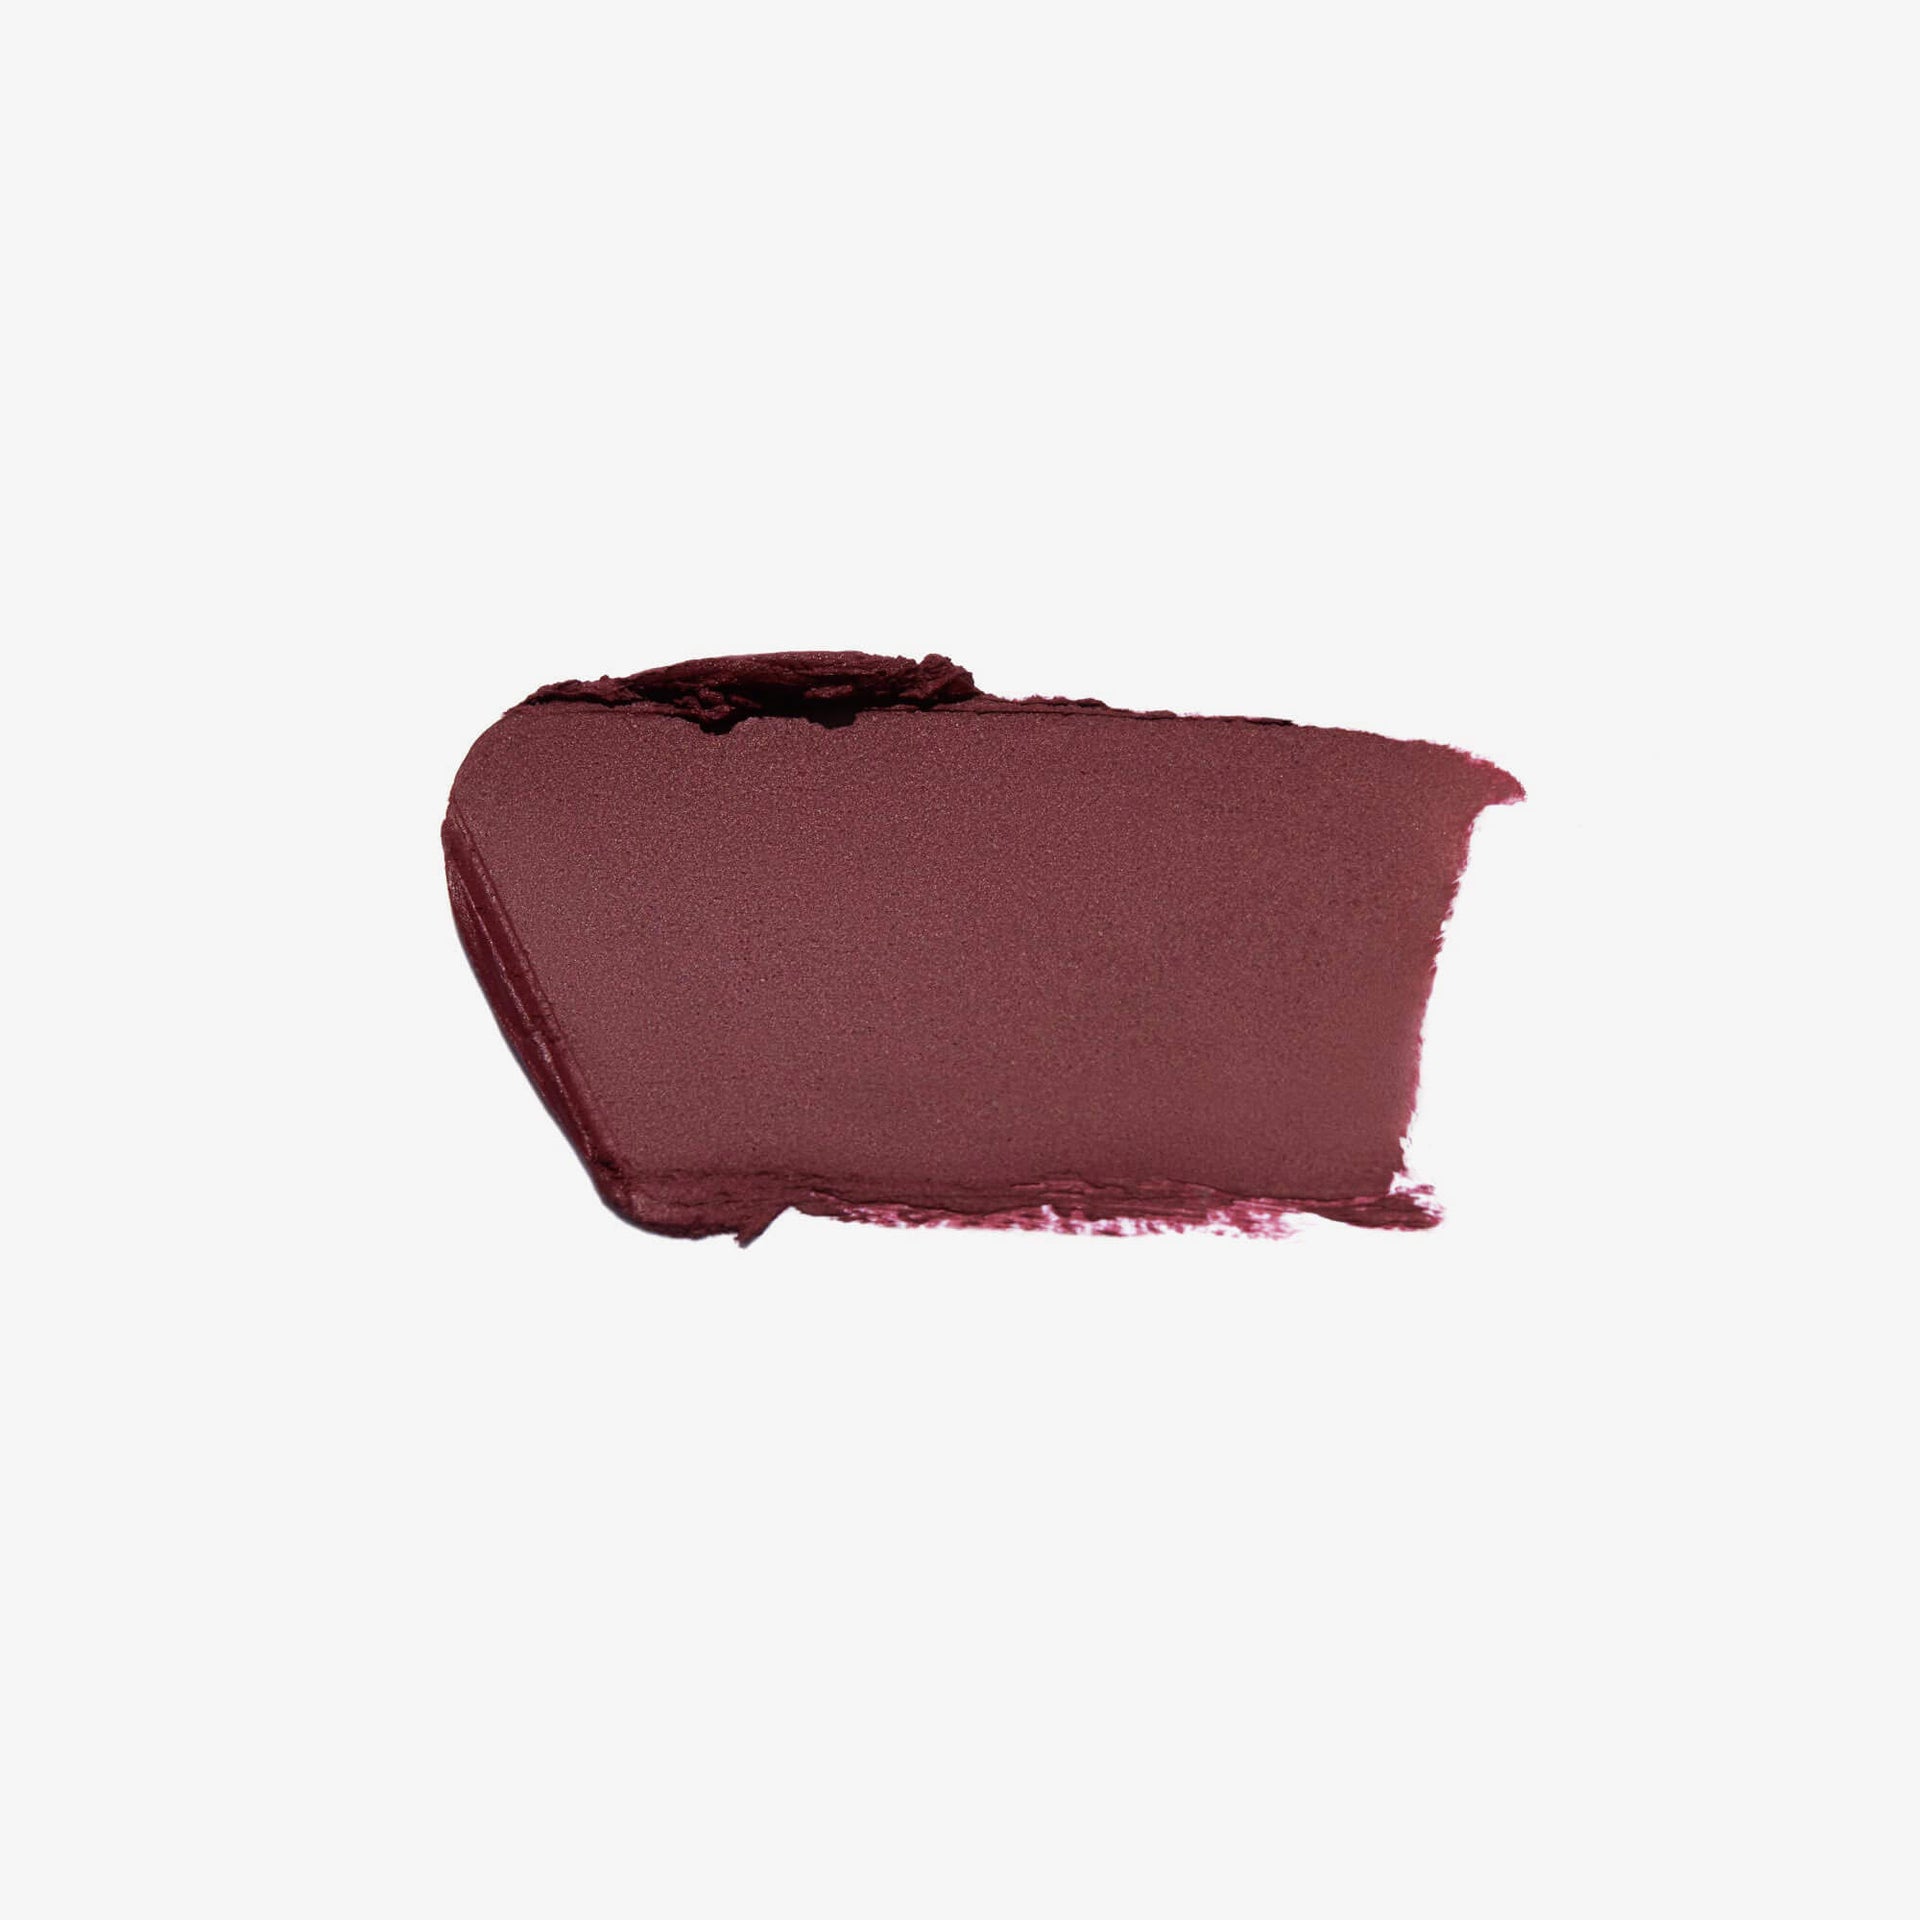 Plum |Limited Edition Satin Lipstick Swatch Shade Plum